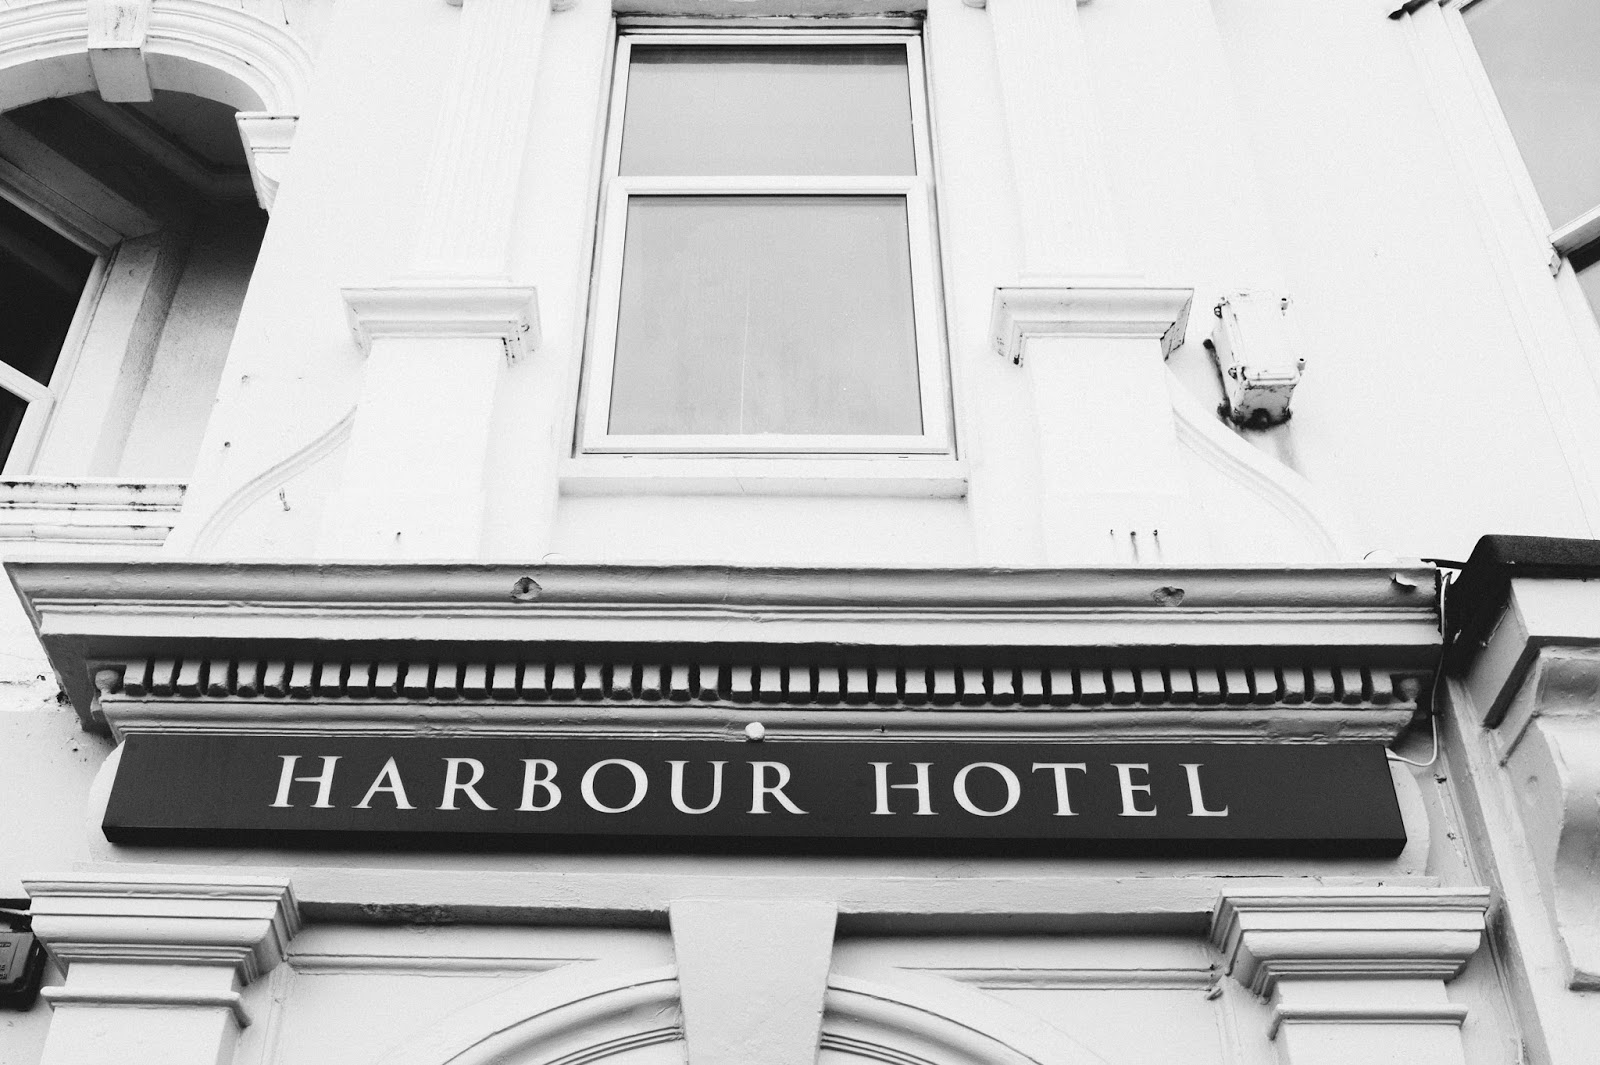 Brighton Harbour Hotel by Allison Dewey Photography